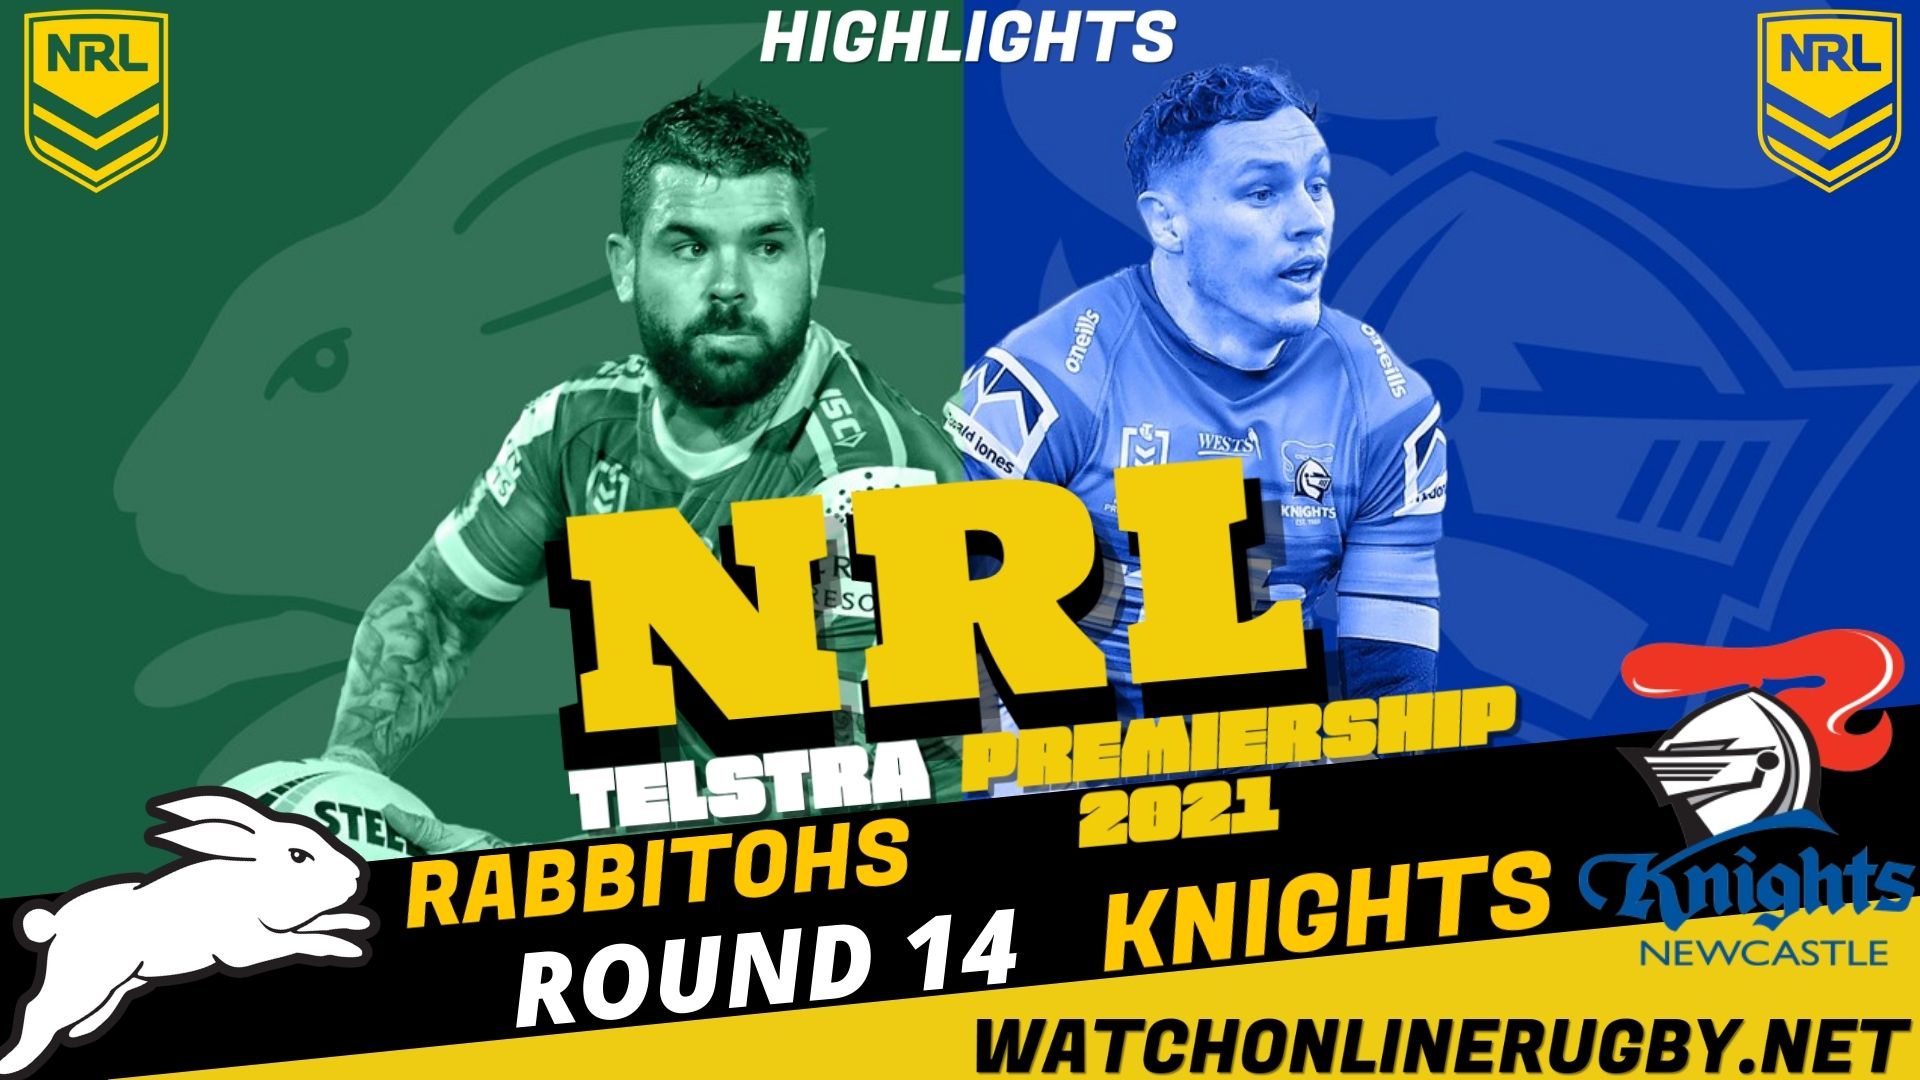 Rabbitohs Vs Knights Highlights RD 14 NRL Rugby